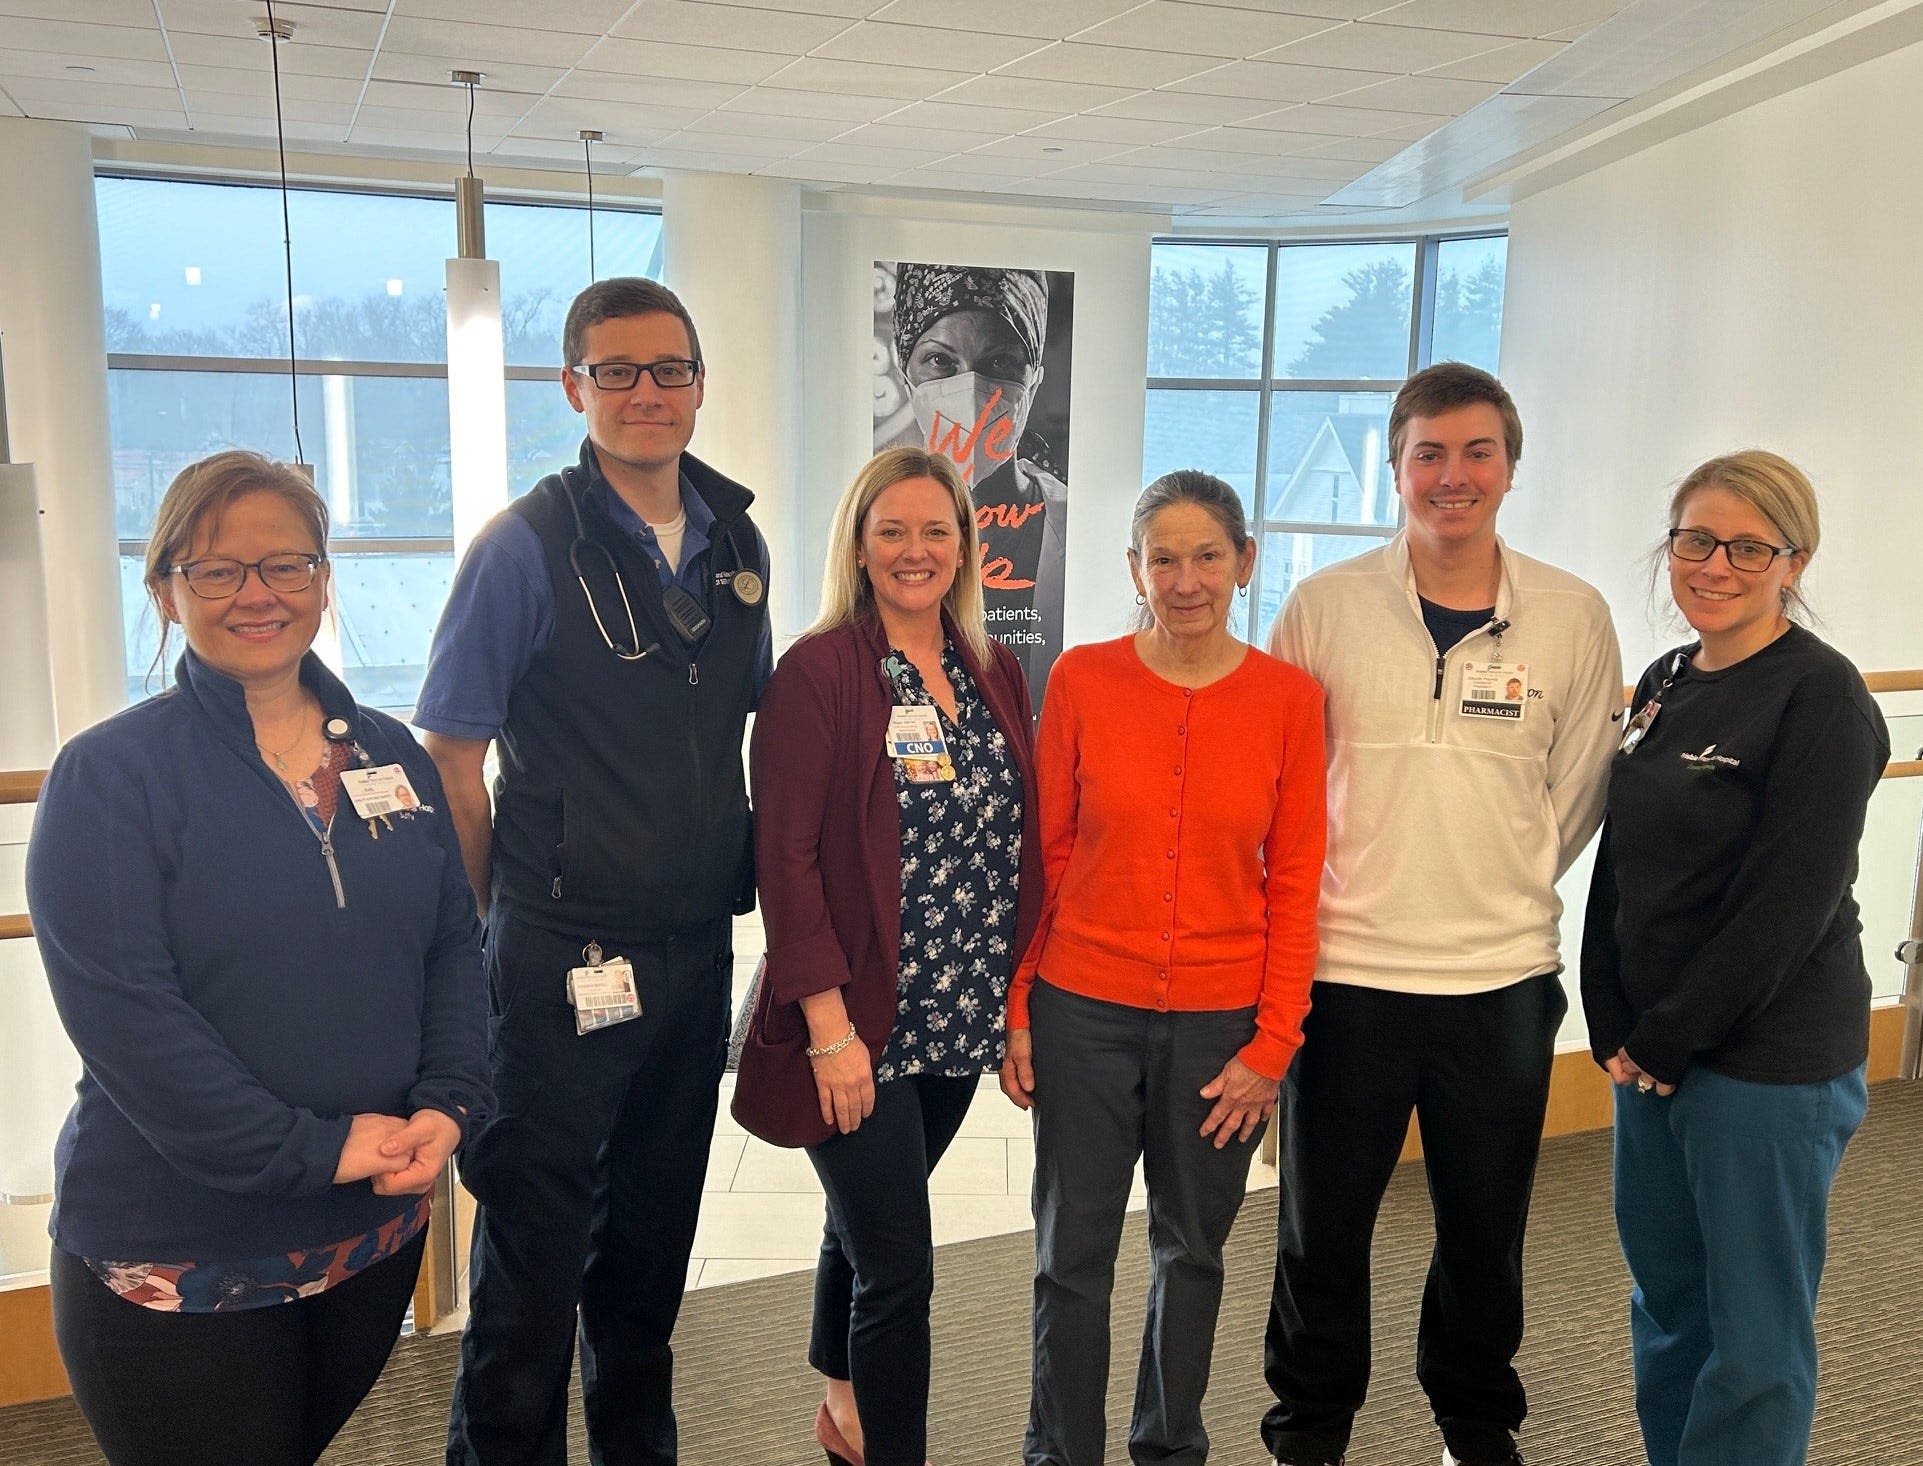 Portsmouth Regional Hospital provides paid training for LNAs: Seacoast health news